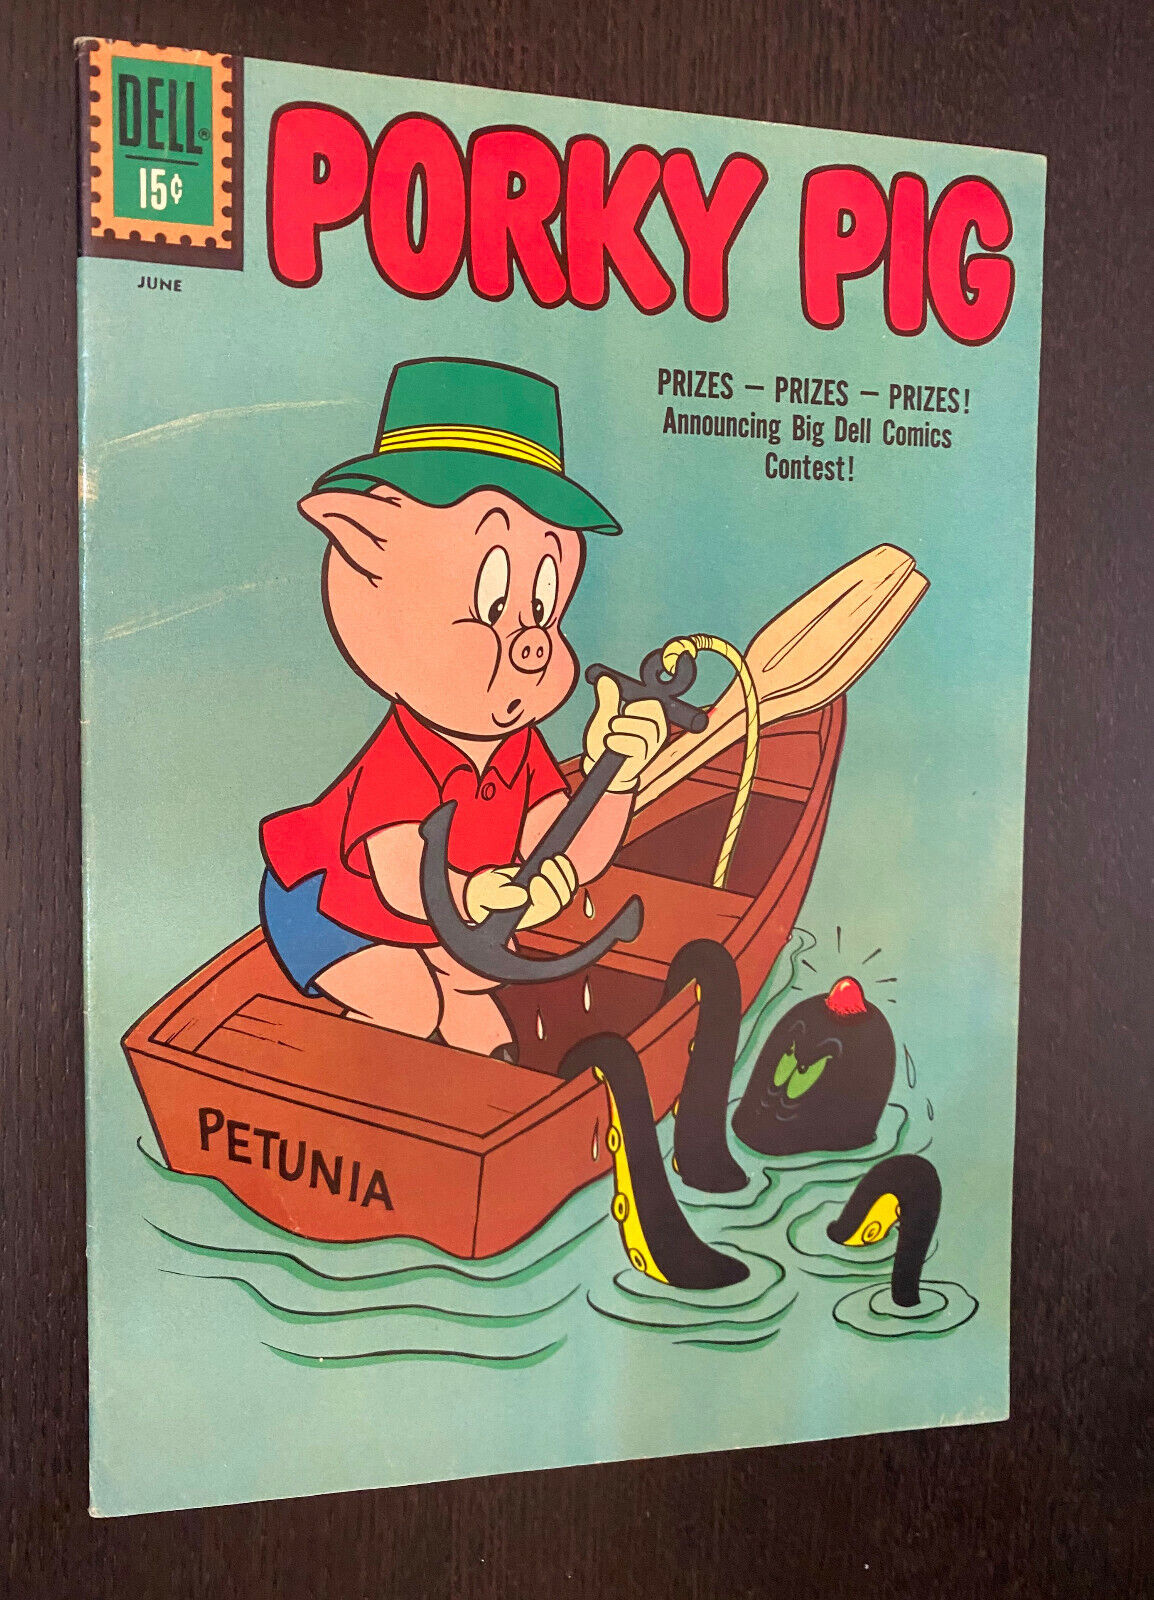 PORKY PIG #76 (Dell Comics 1961) -- Silver Age Cartoon  -- FN+